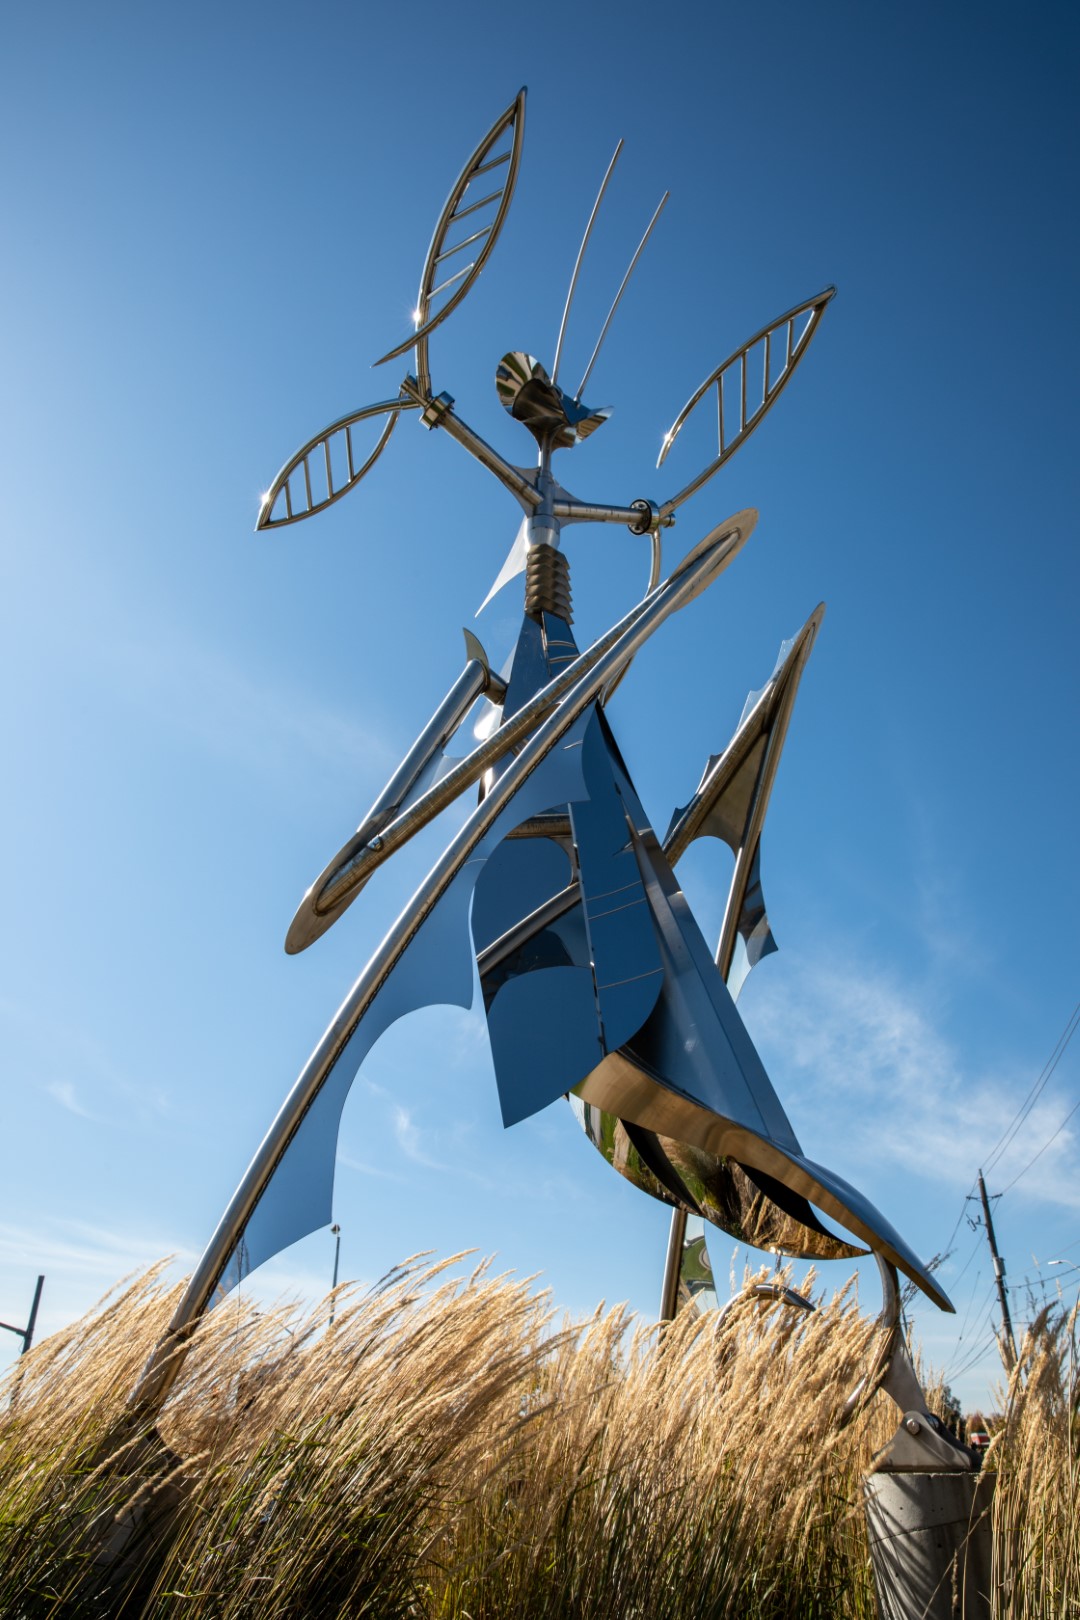 Mantis Queen sculpture standing in front of a blue sky